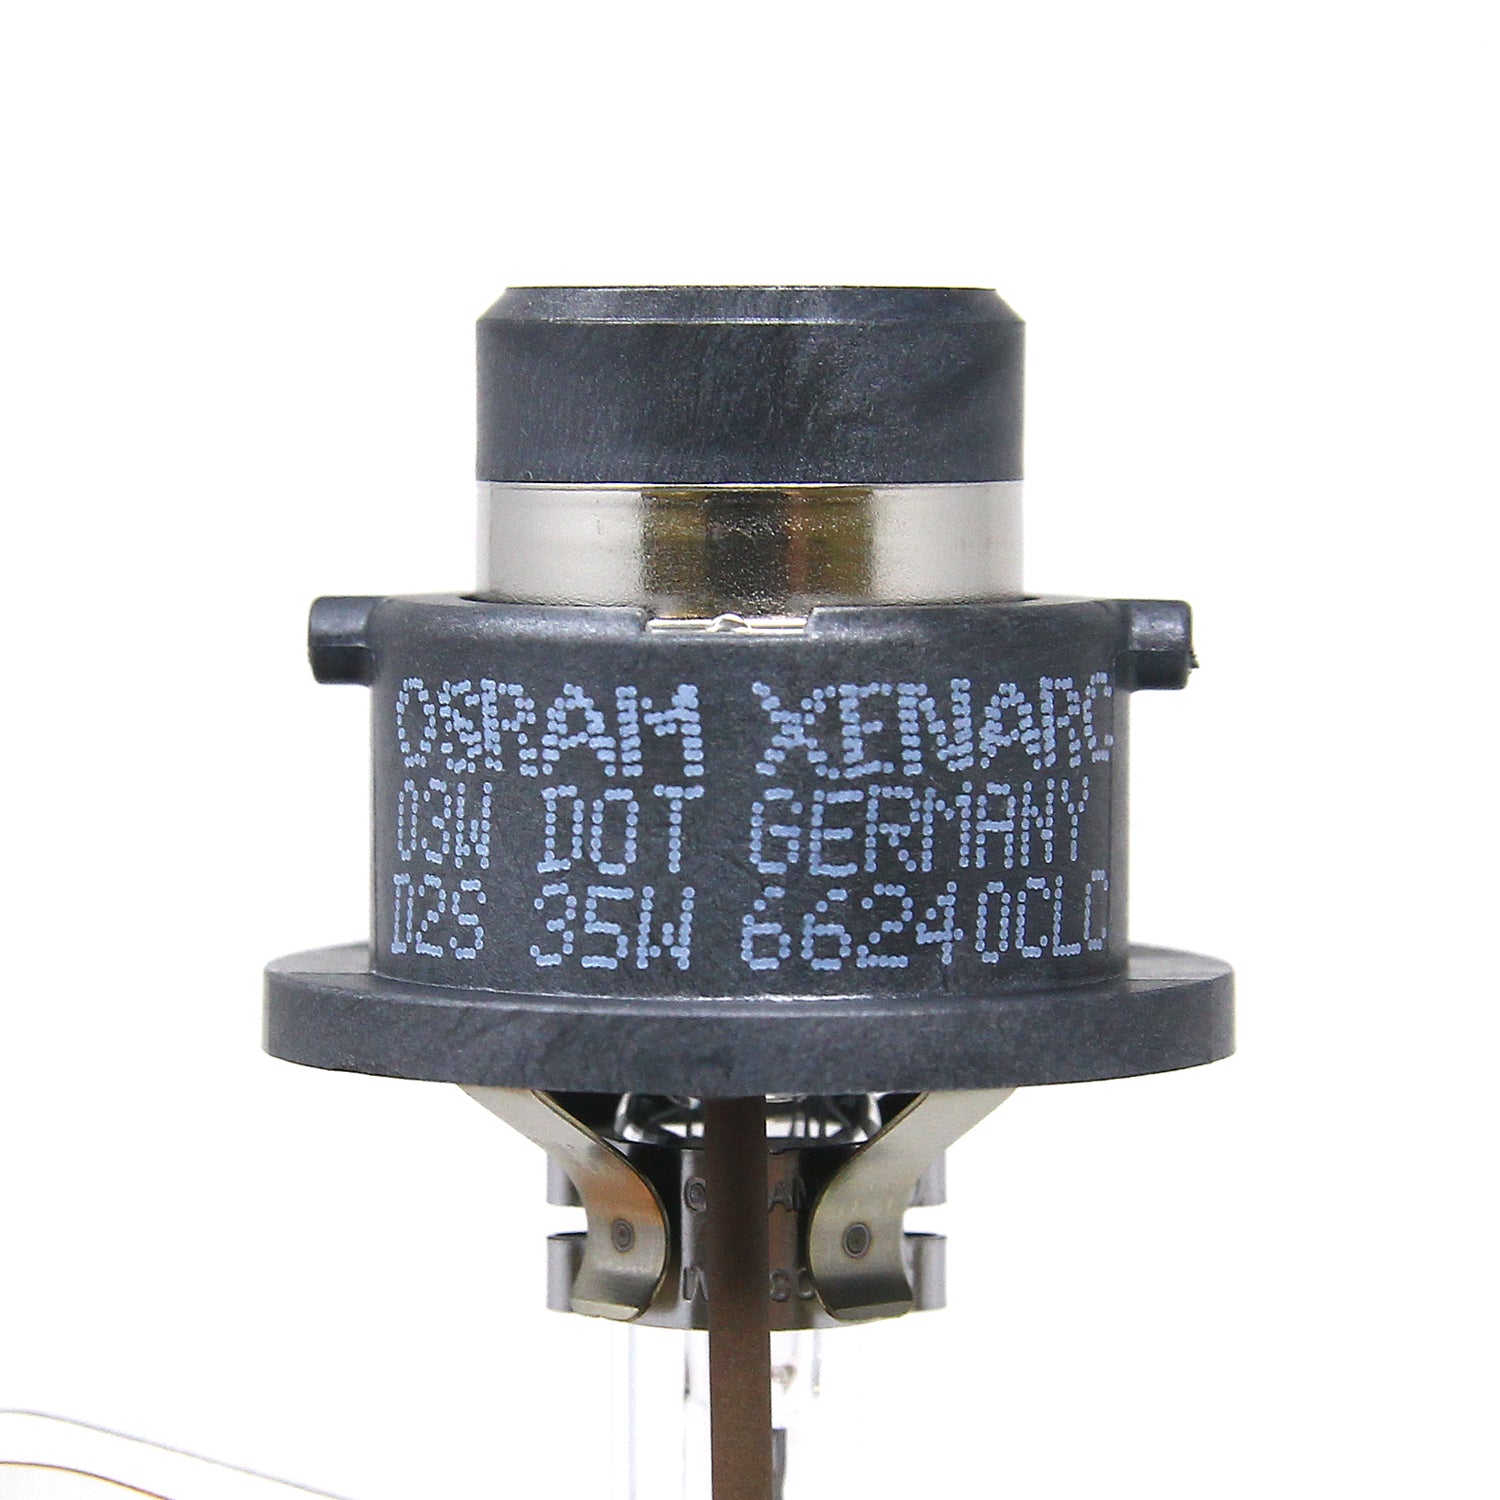 Osram D2S - 66240 - Classic Xenarc 35W HID Automotive Bulb